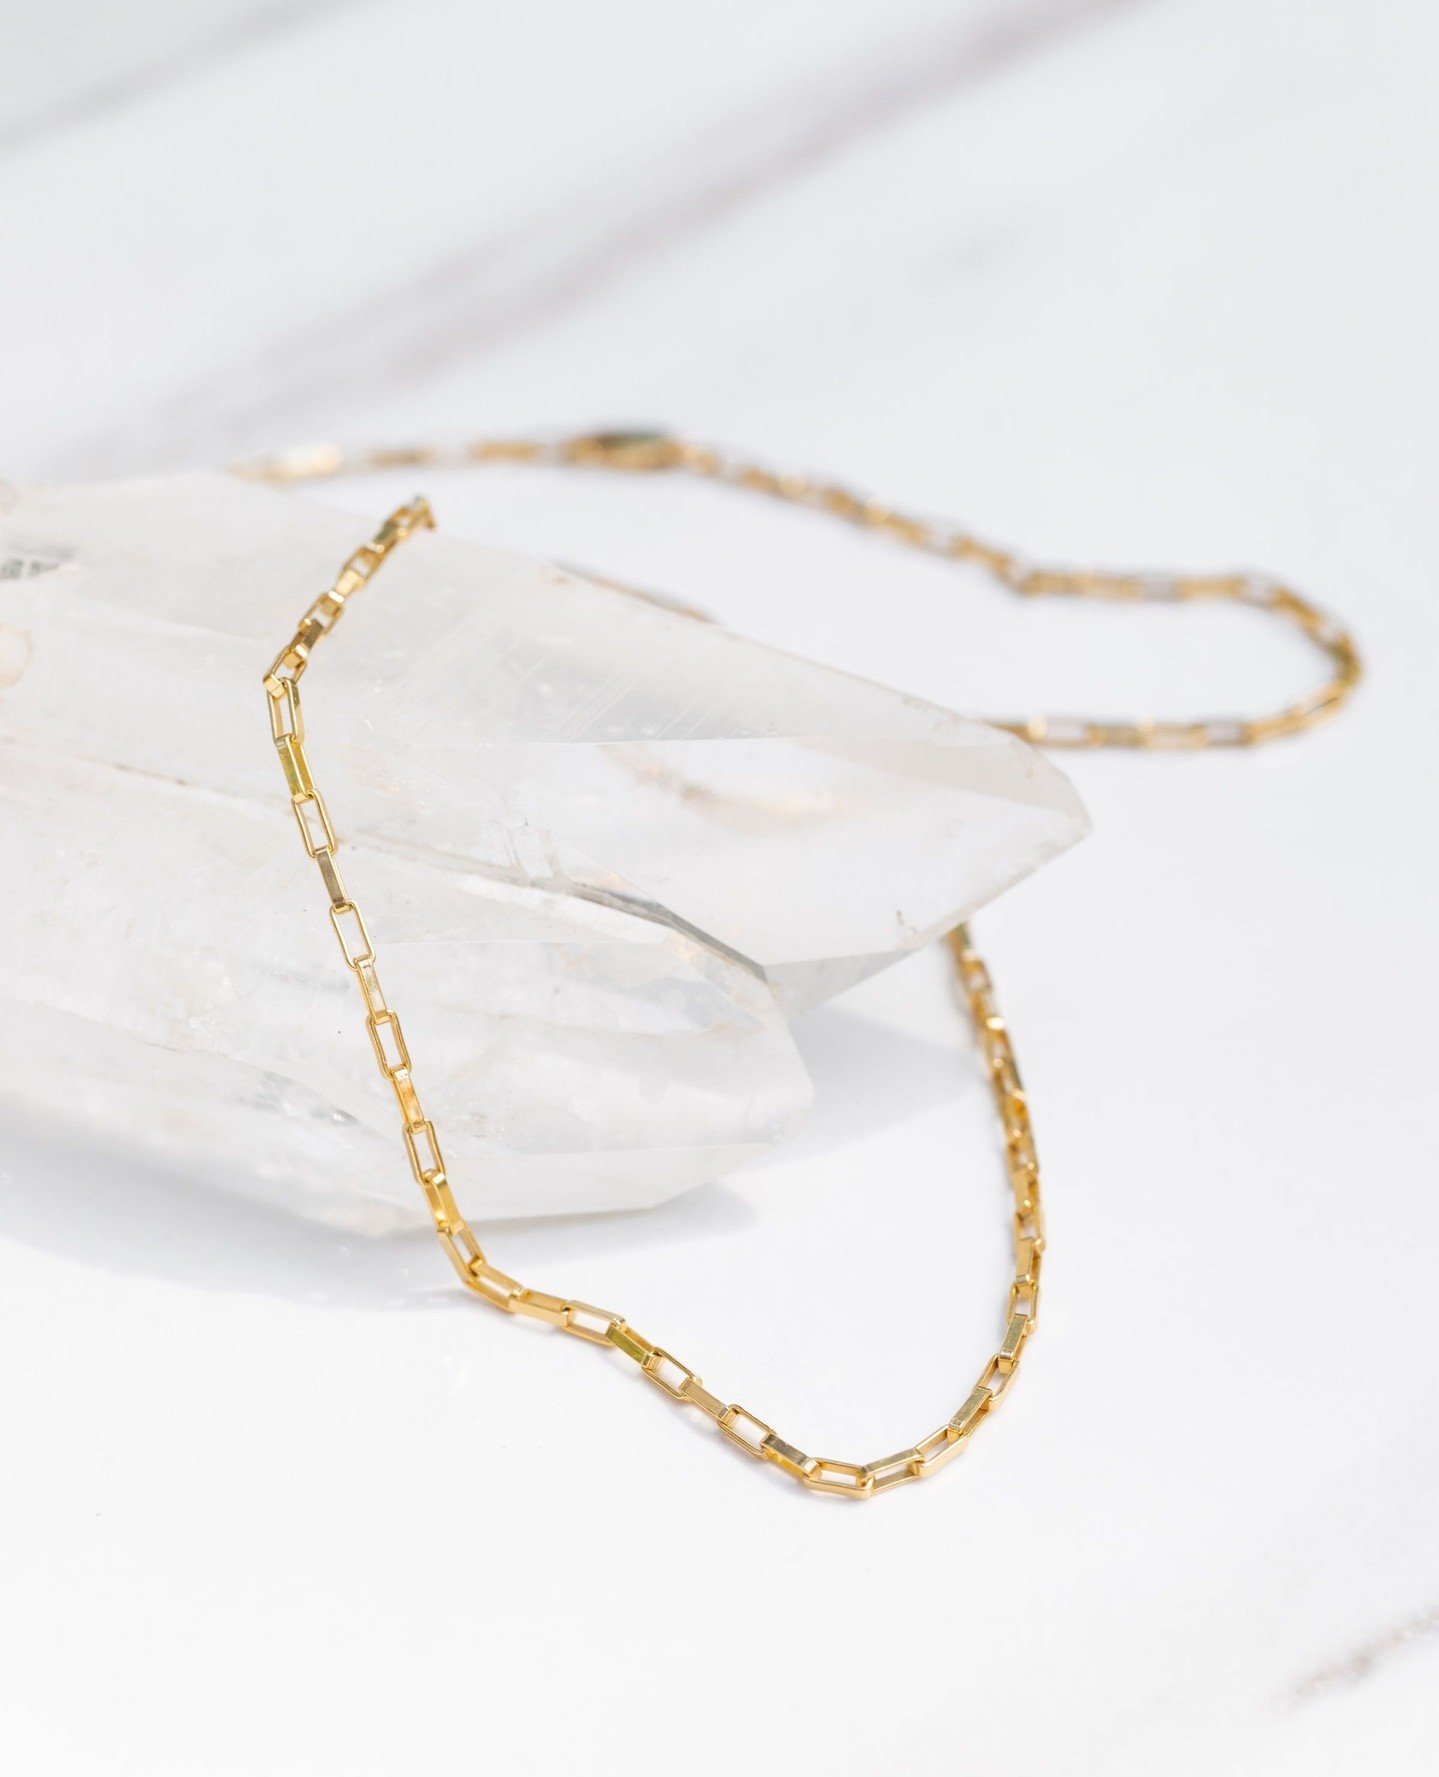 Rectangle box chain bracelets &amp; necklaces!⁠
Always a favorite ✨️⁠
⁠
⁠
⁠
⁠
⁠
#goldjewelry #cierradesigns #lumengallery #capitolacalifornia #santacruzmade #montereybaylife